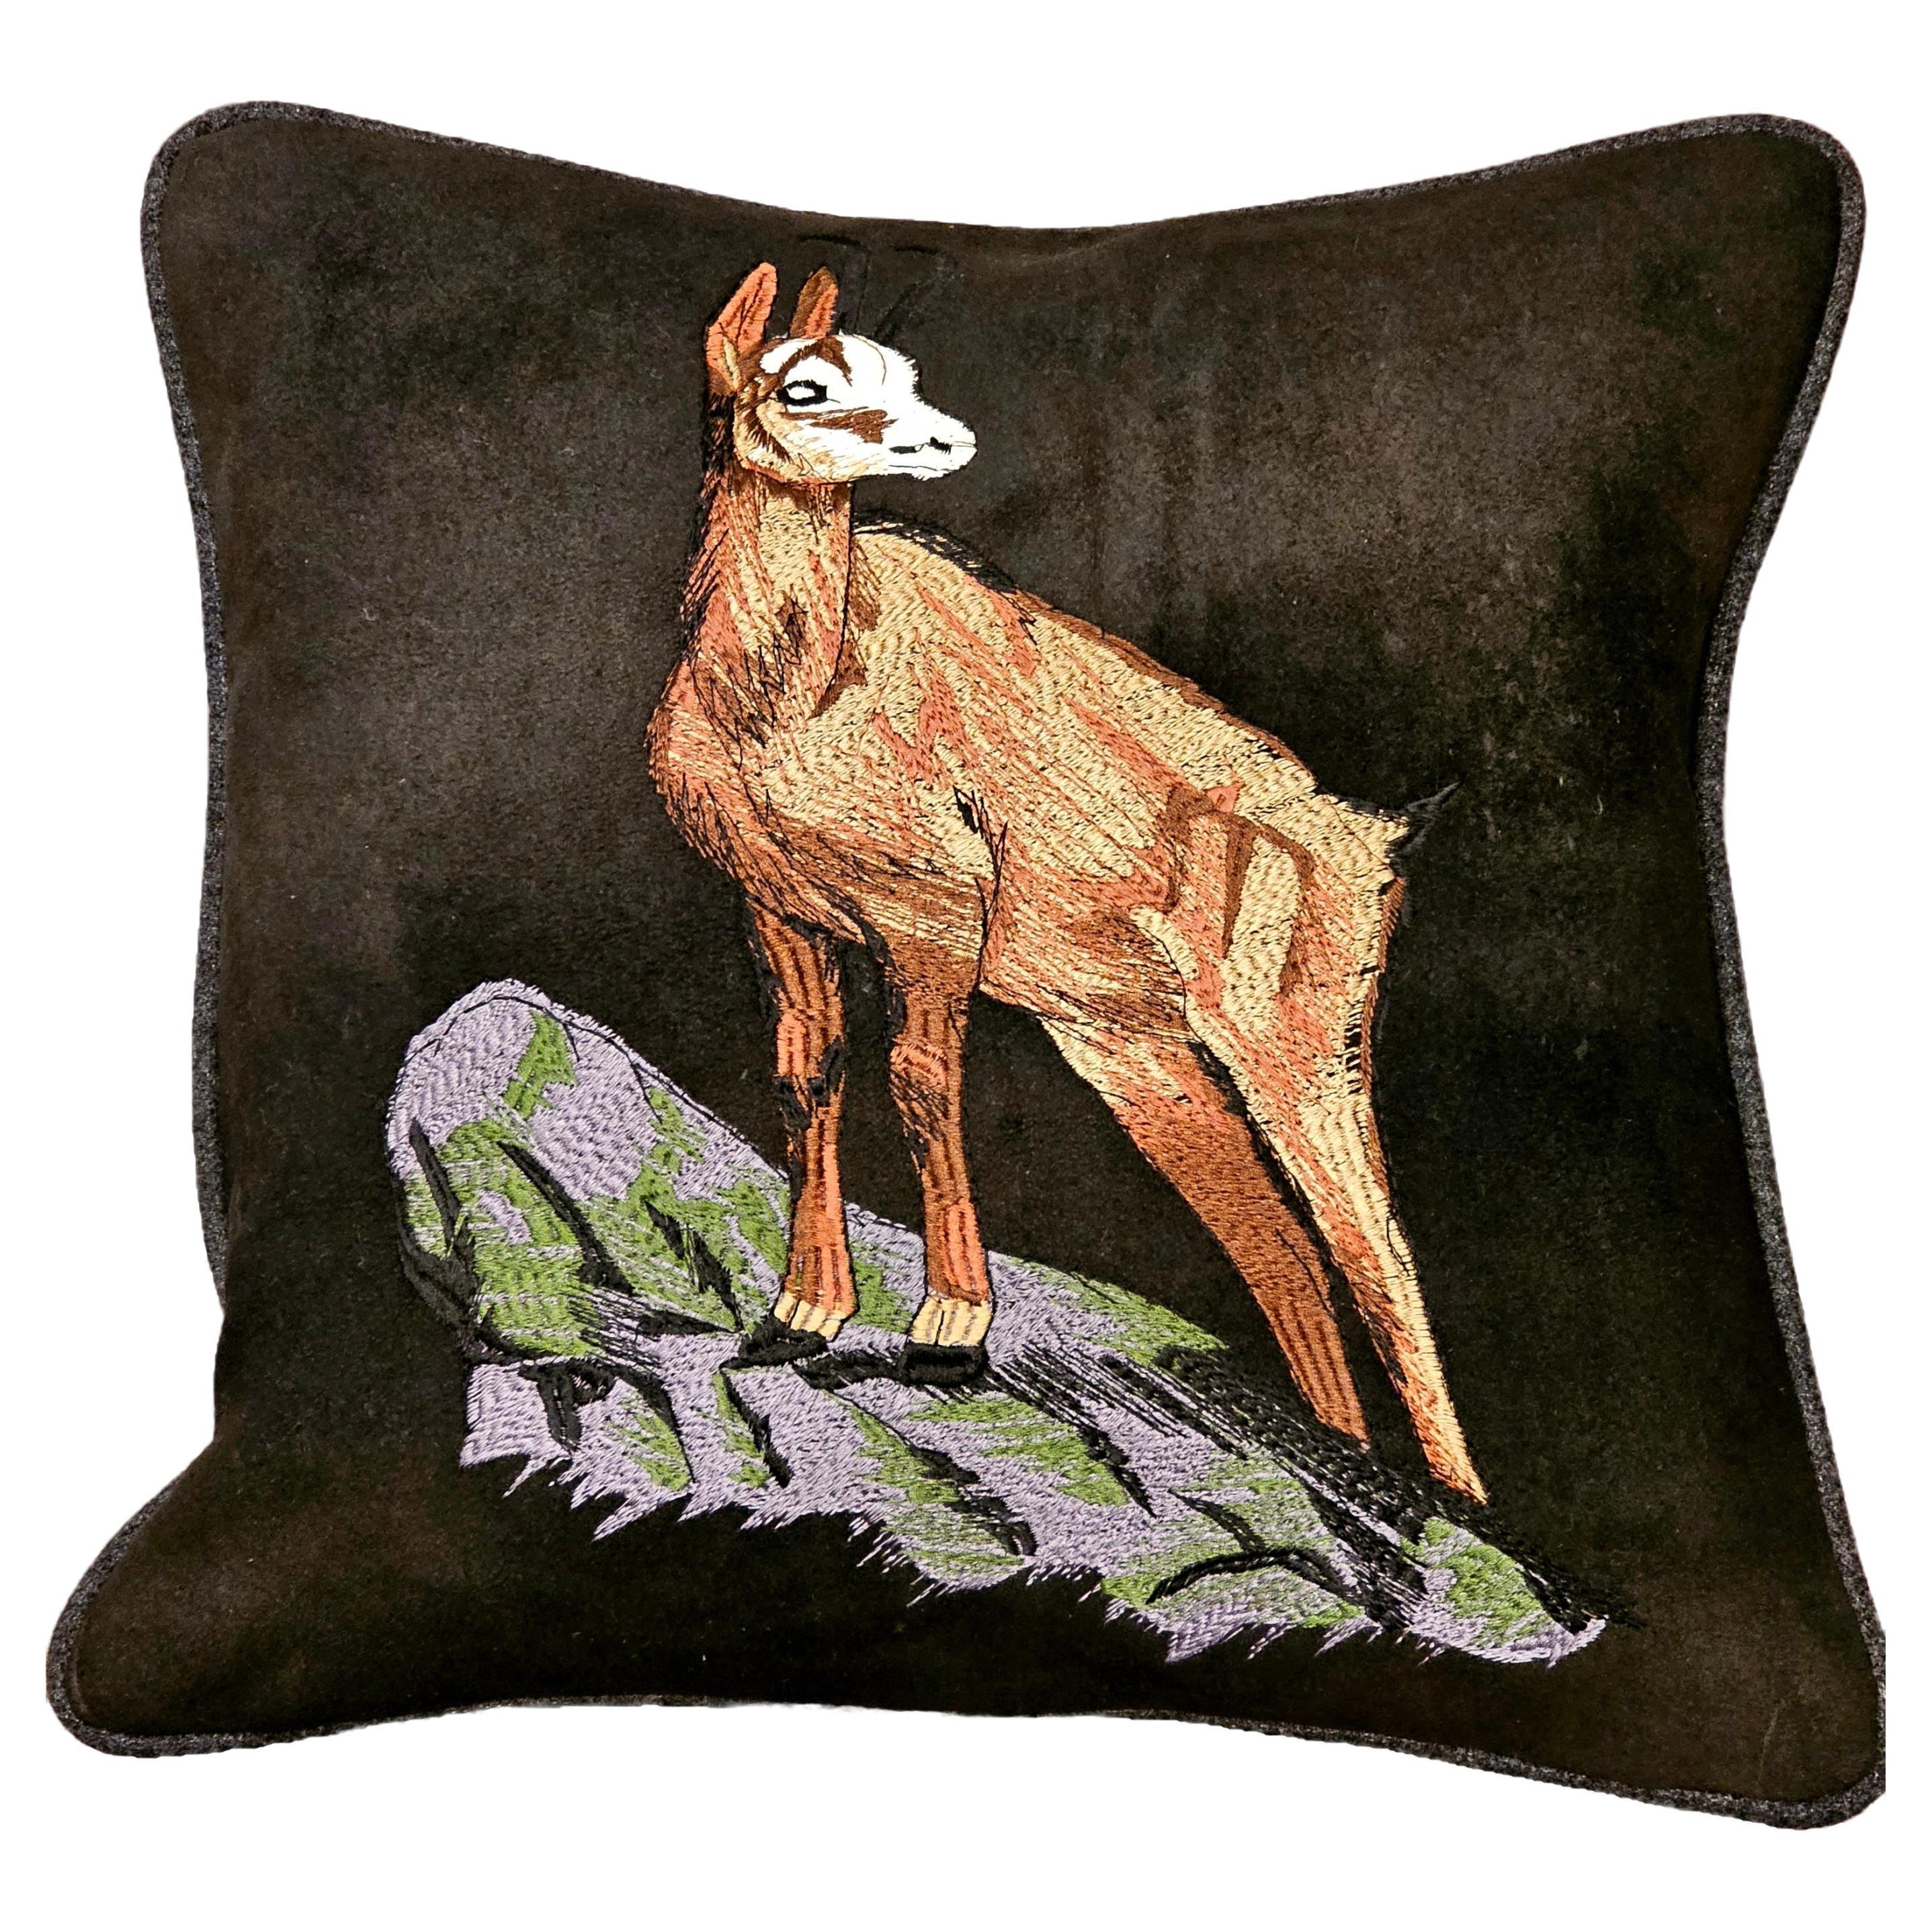 Black Forest Cushion Deer Leather Stitched Sofina Boutique Kitzbuehel For Sale